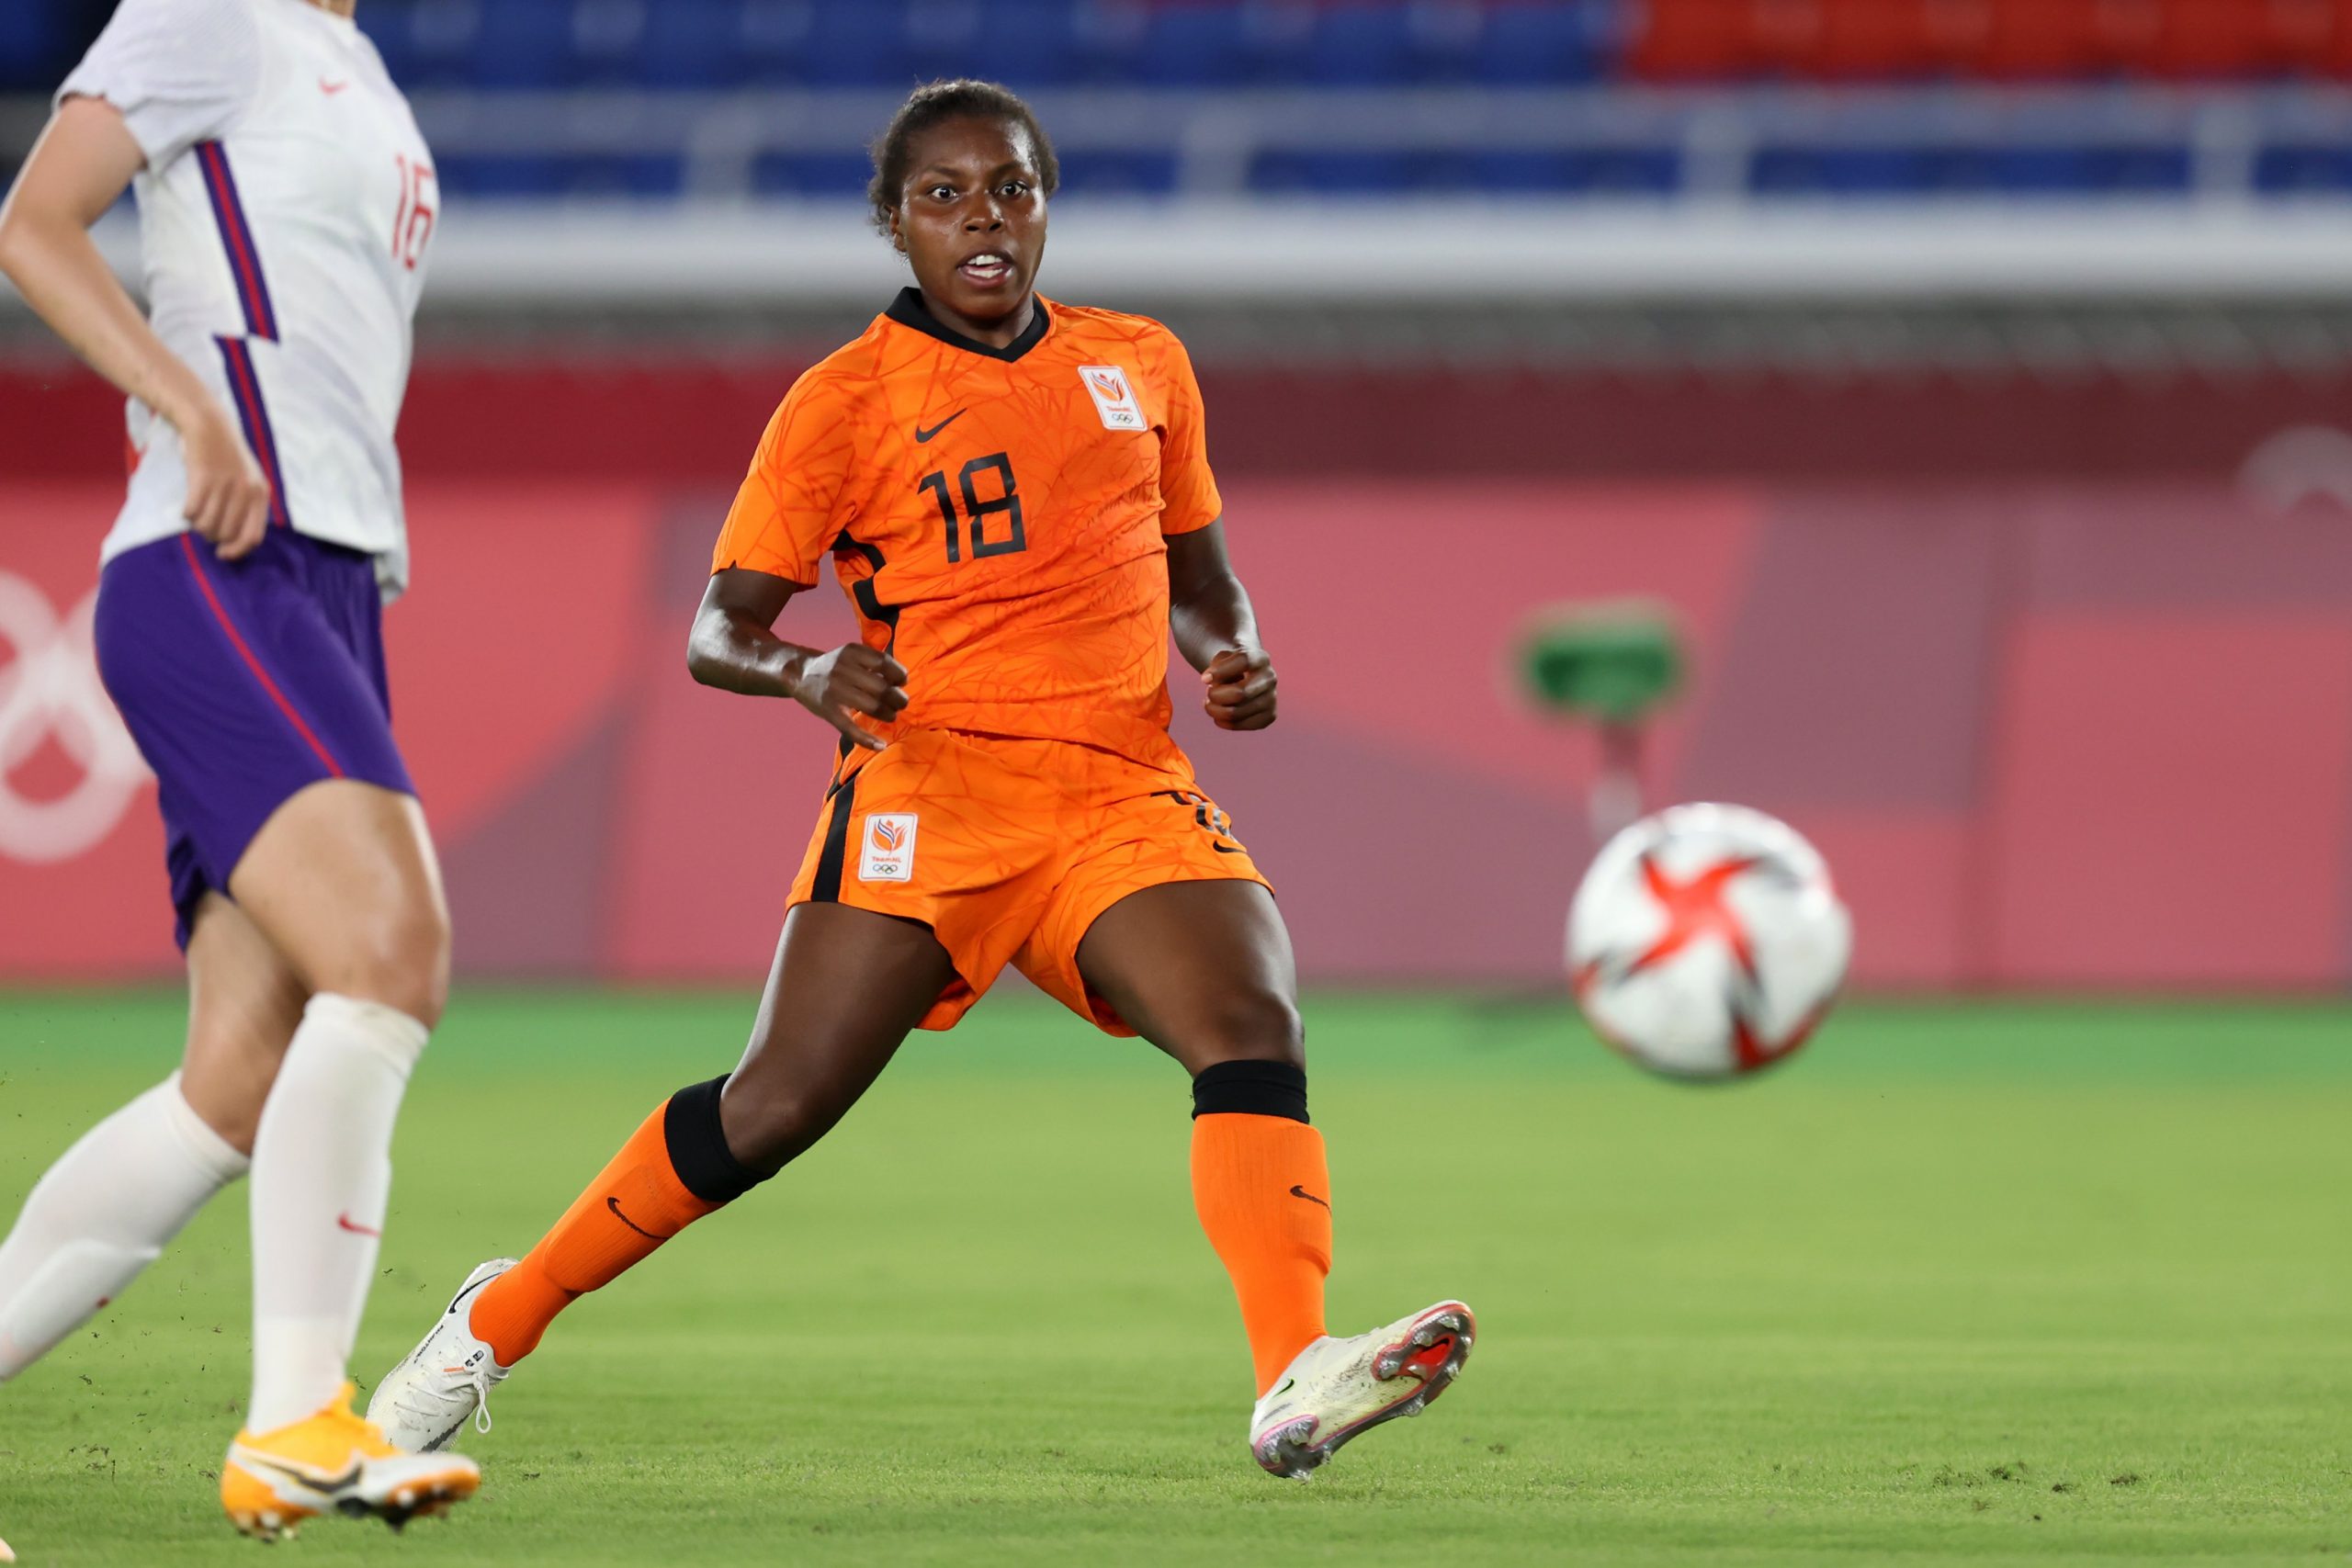 Holanda goleia a China no Futebol Feminino